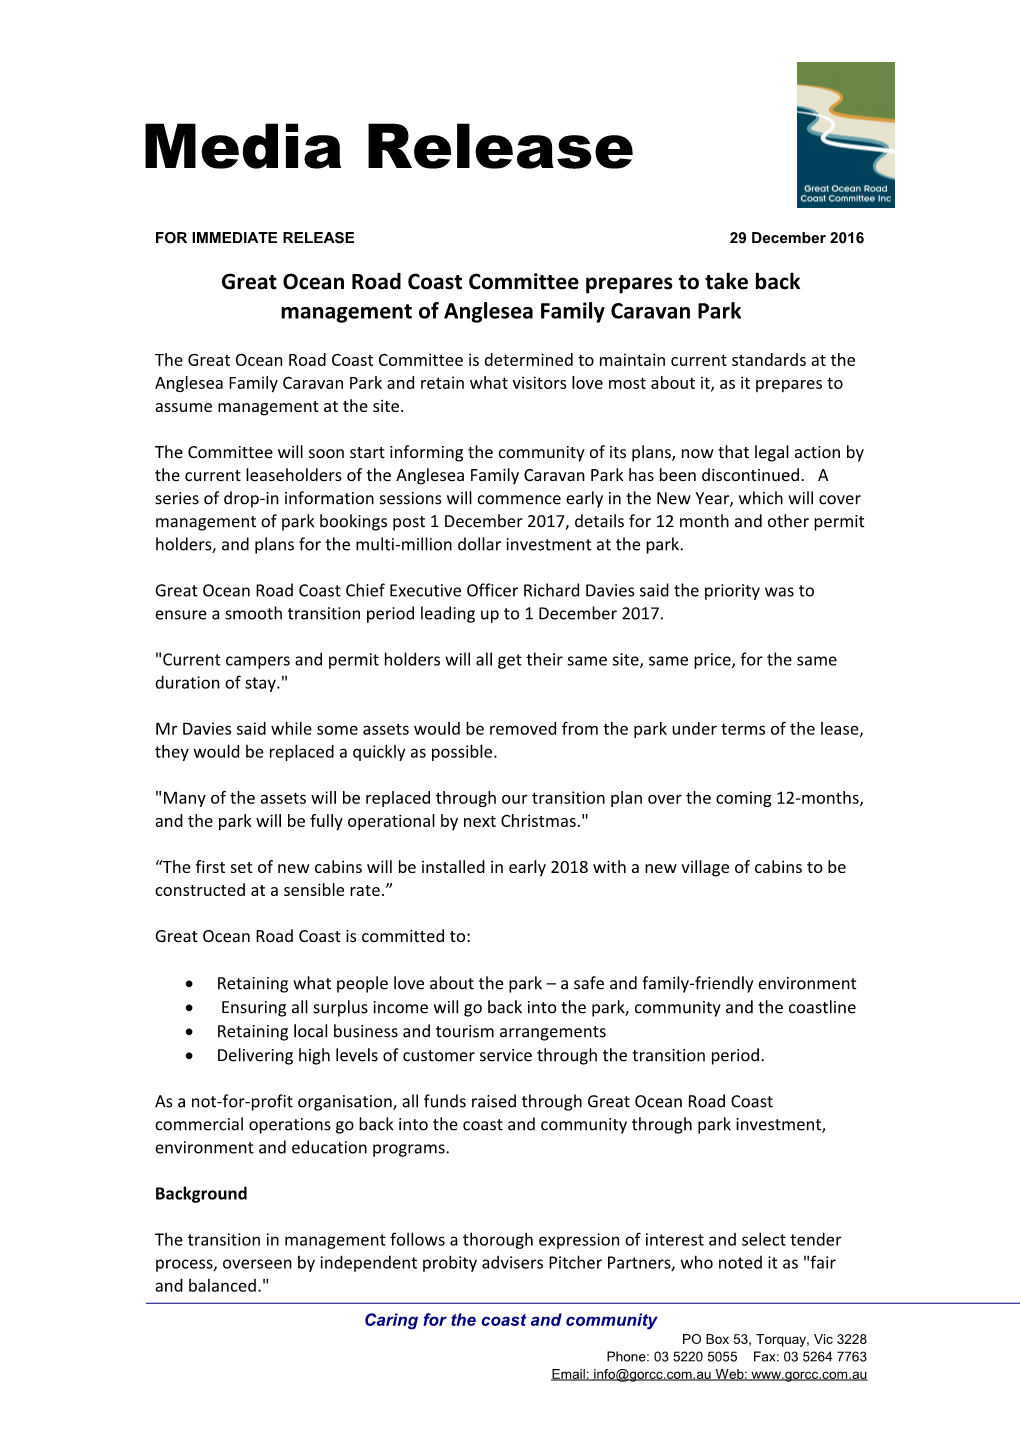 Great Ocean Road Coast Committee Prepares to Take Back Management of Anglesea Family Caravan